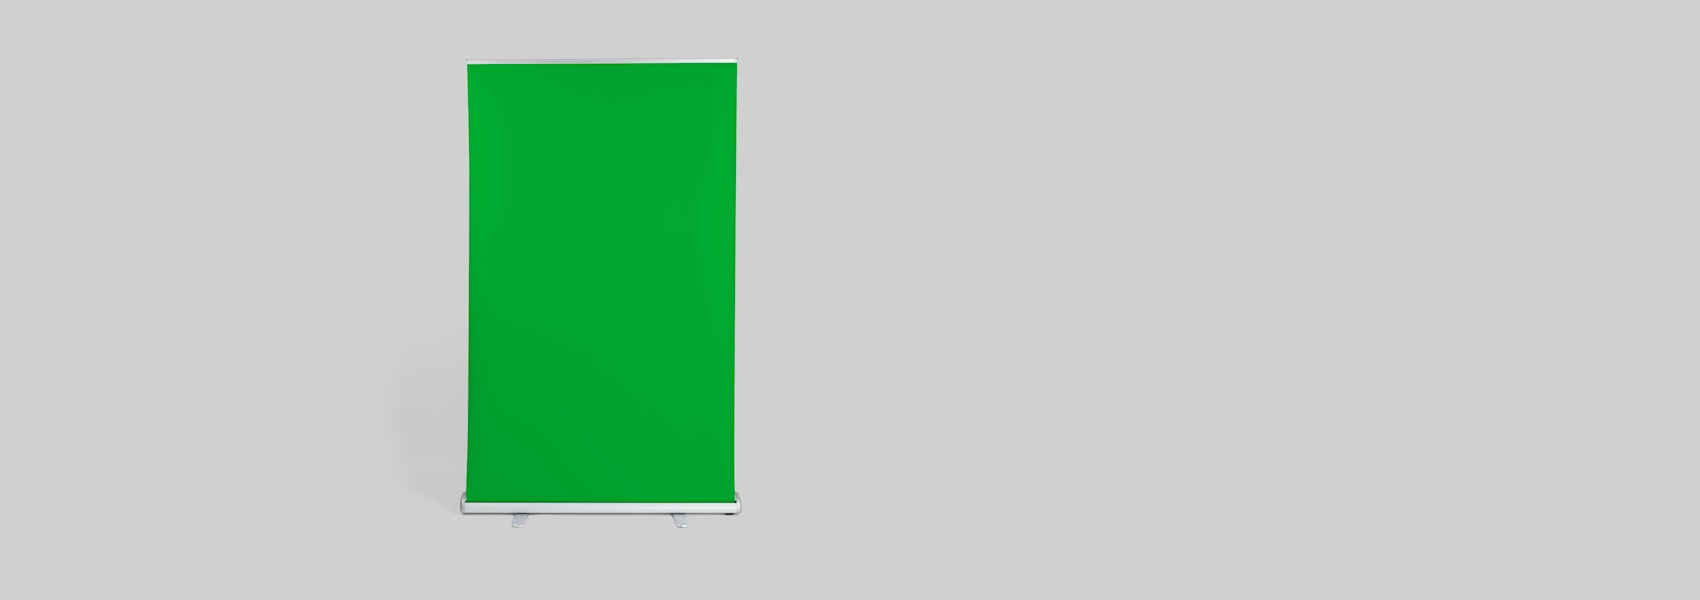 Green screen 2